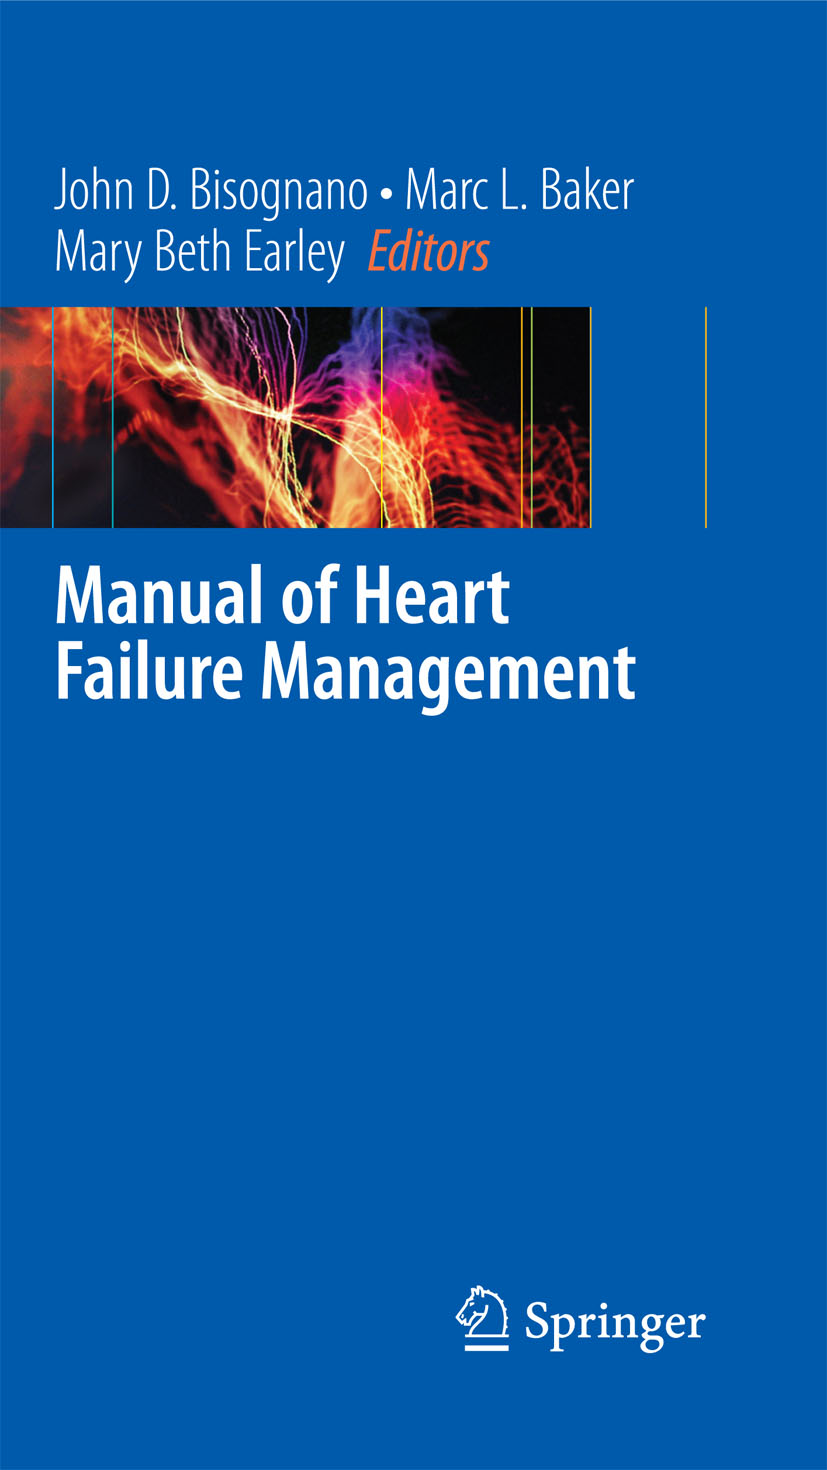 Manual of Heart Failure Management